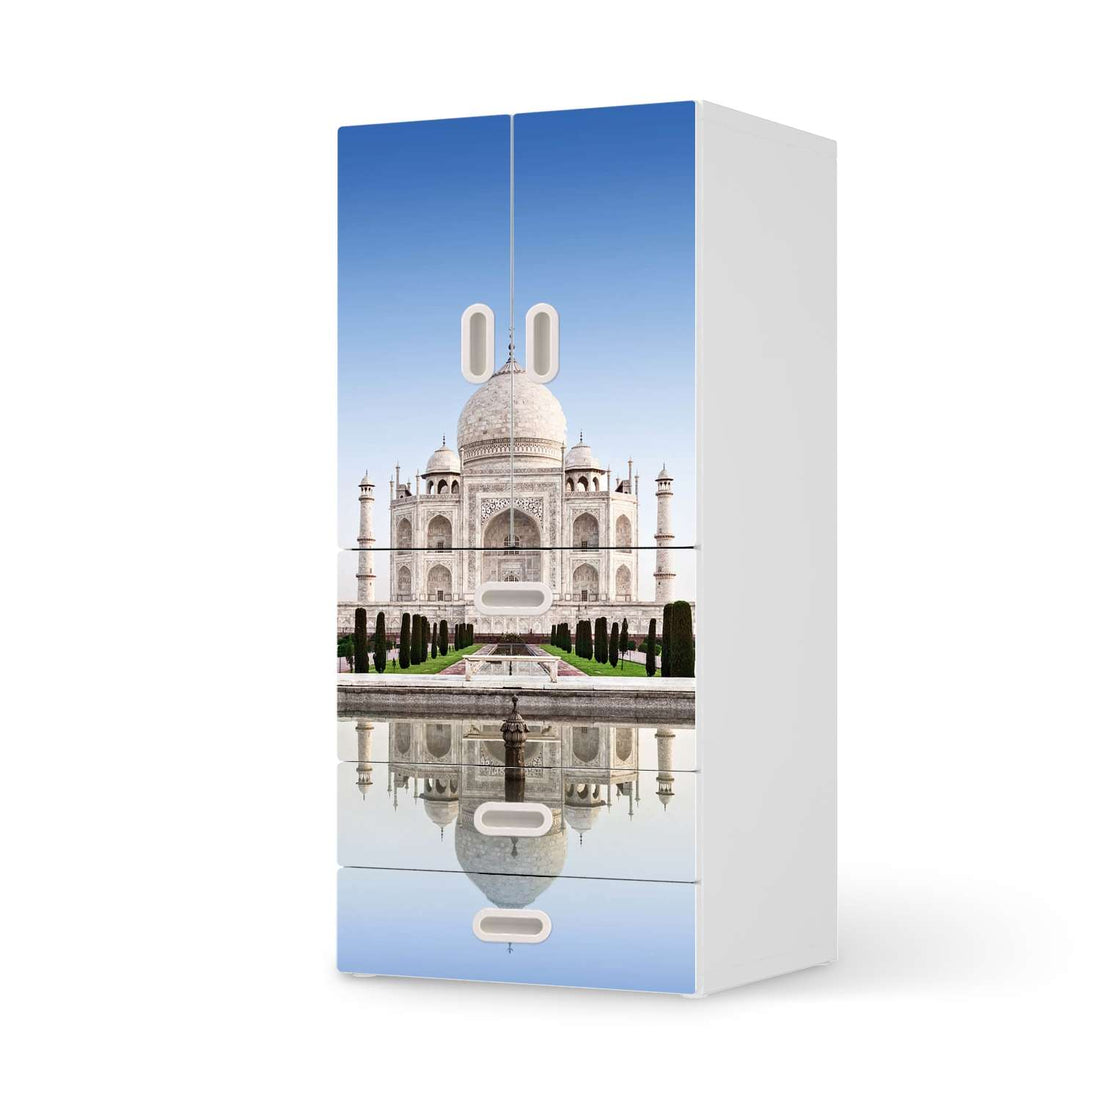 Möbelfolie Taj Mahal - IKEA Stuva / Fritids kombiniert - 3 Schubladen und 2 kleine Türen  - weiss